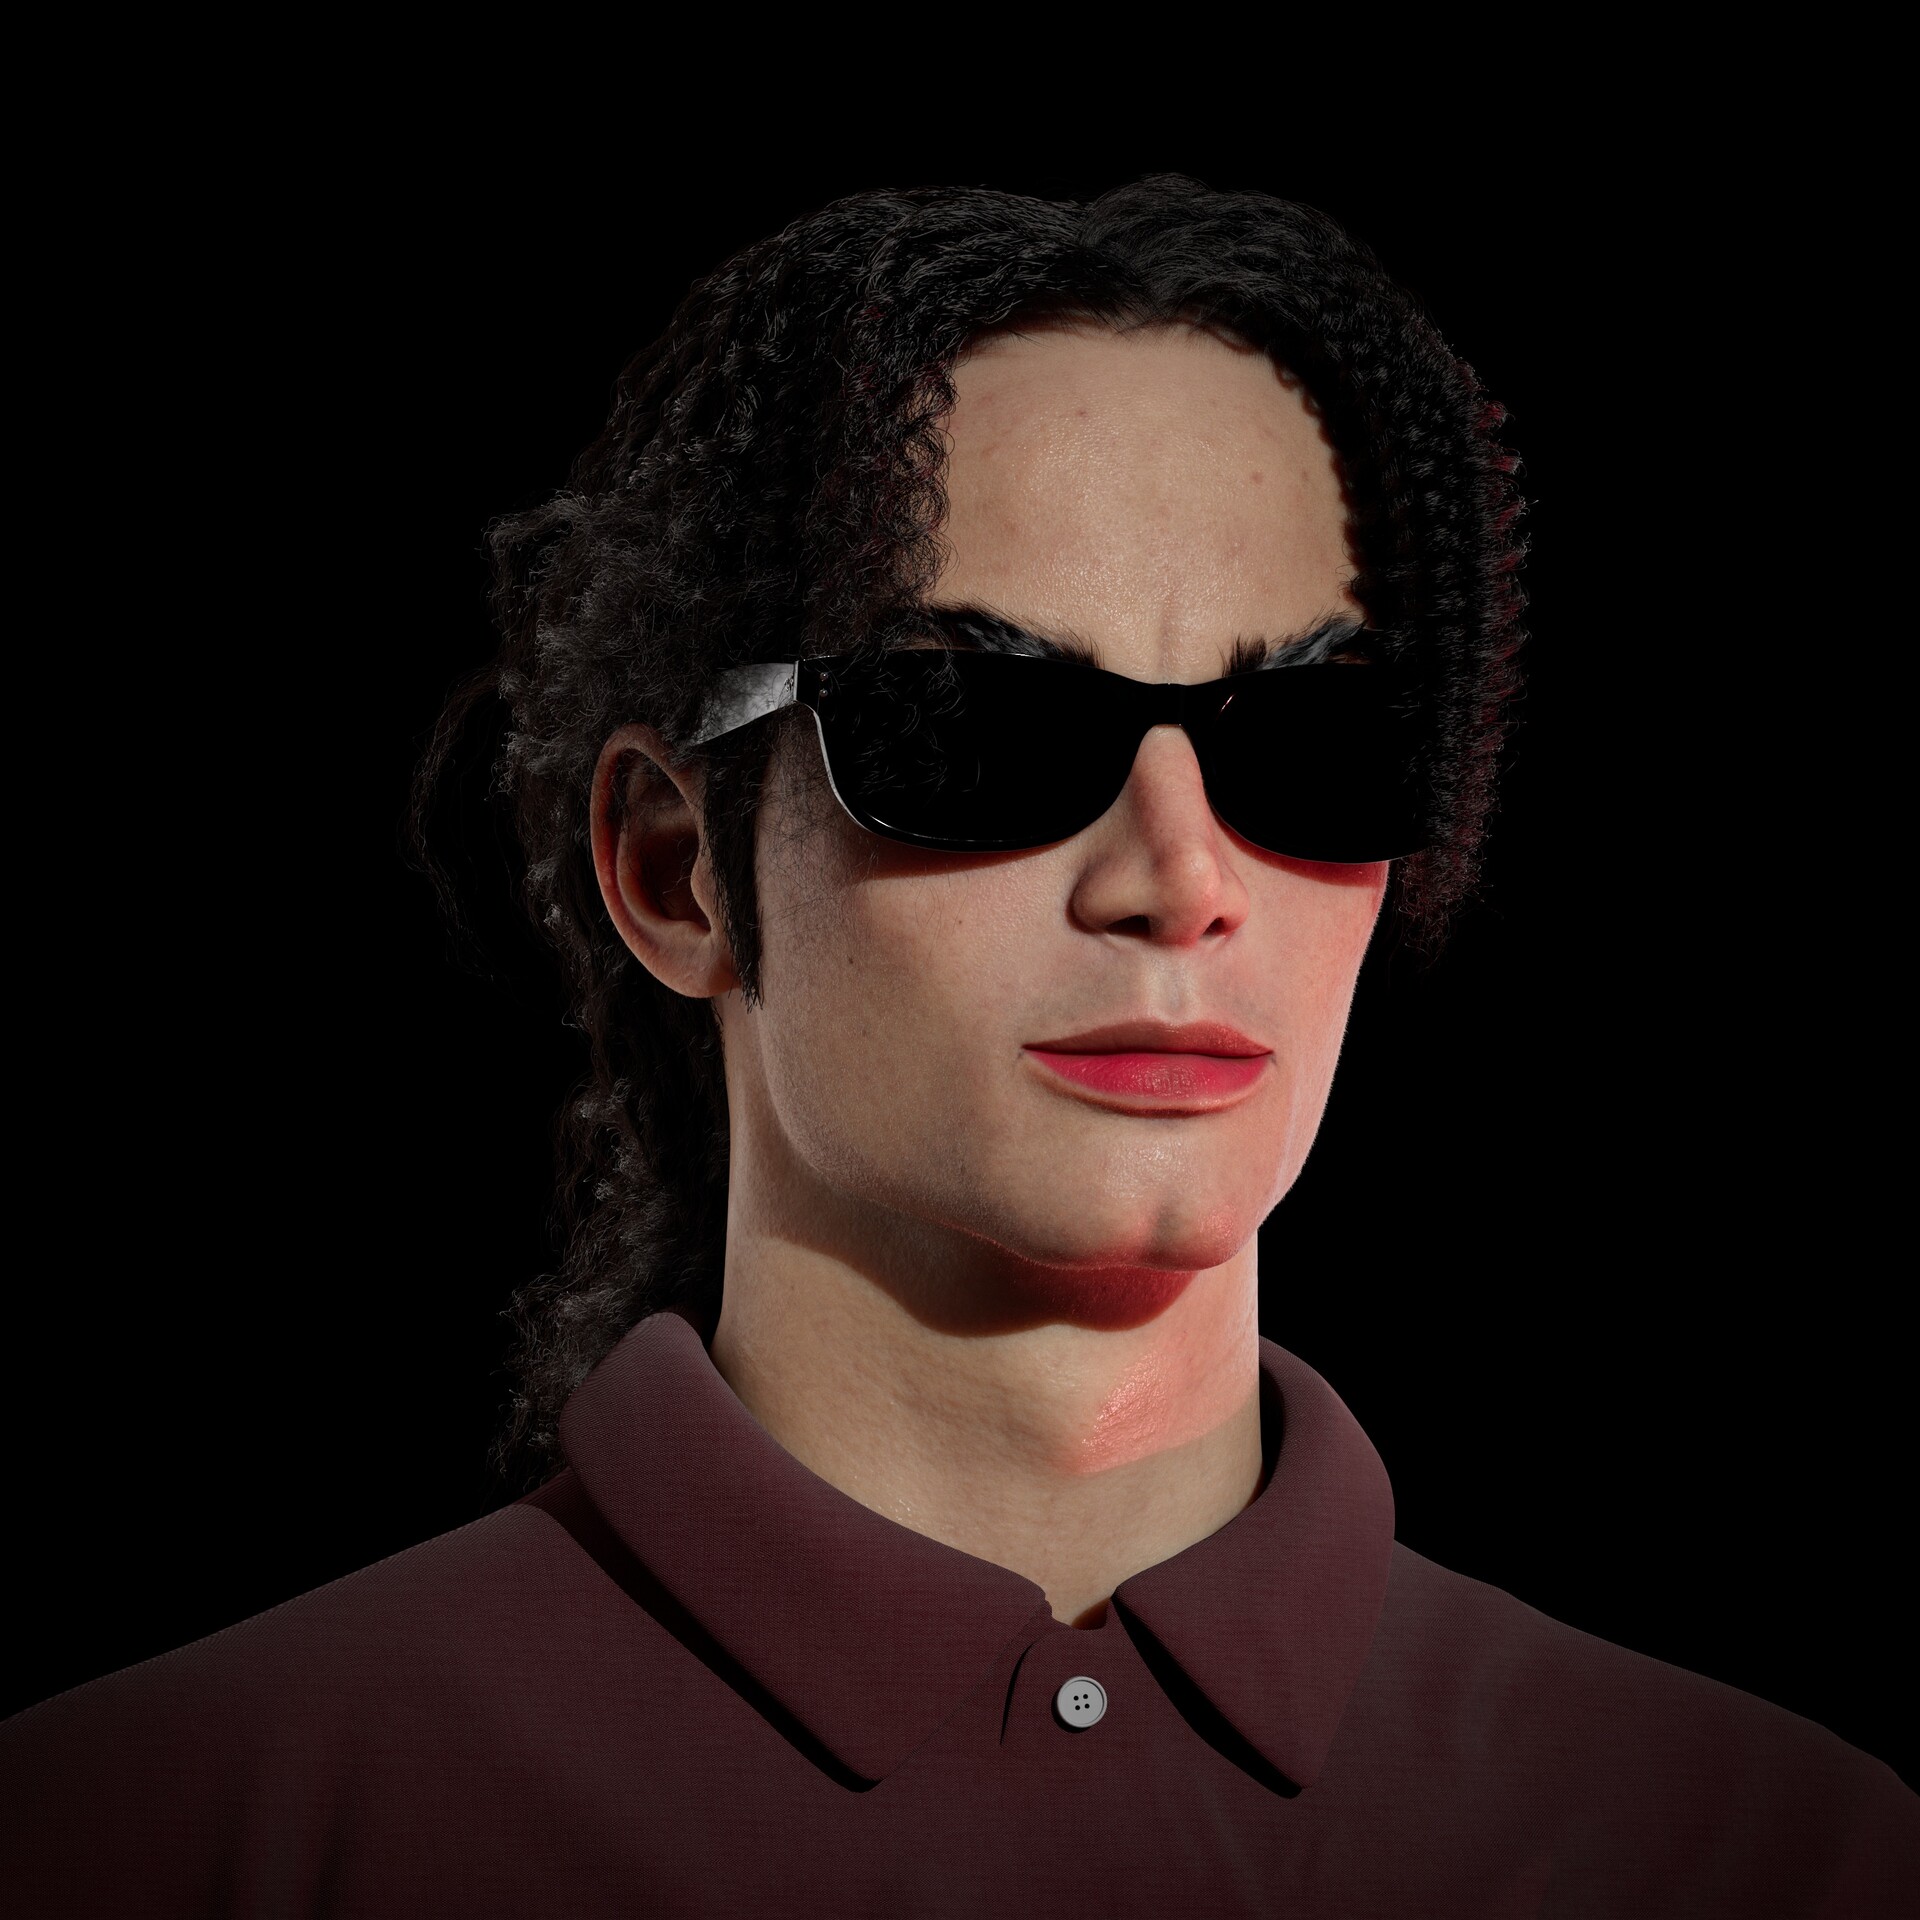 ArtStation - Michael Jackson portrait